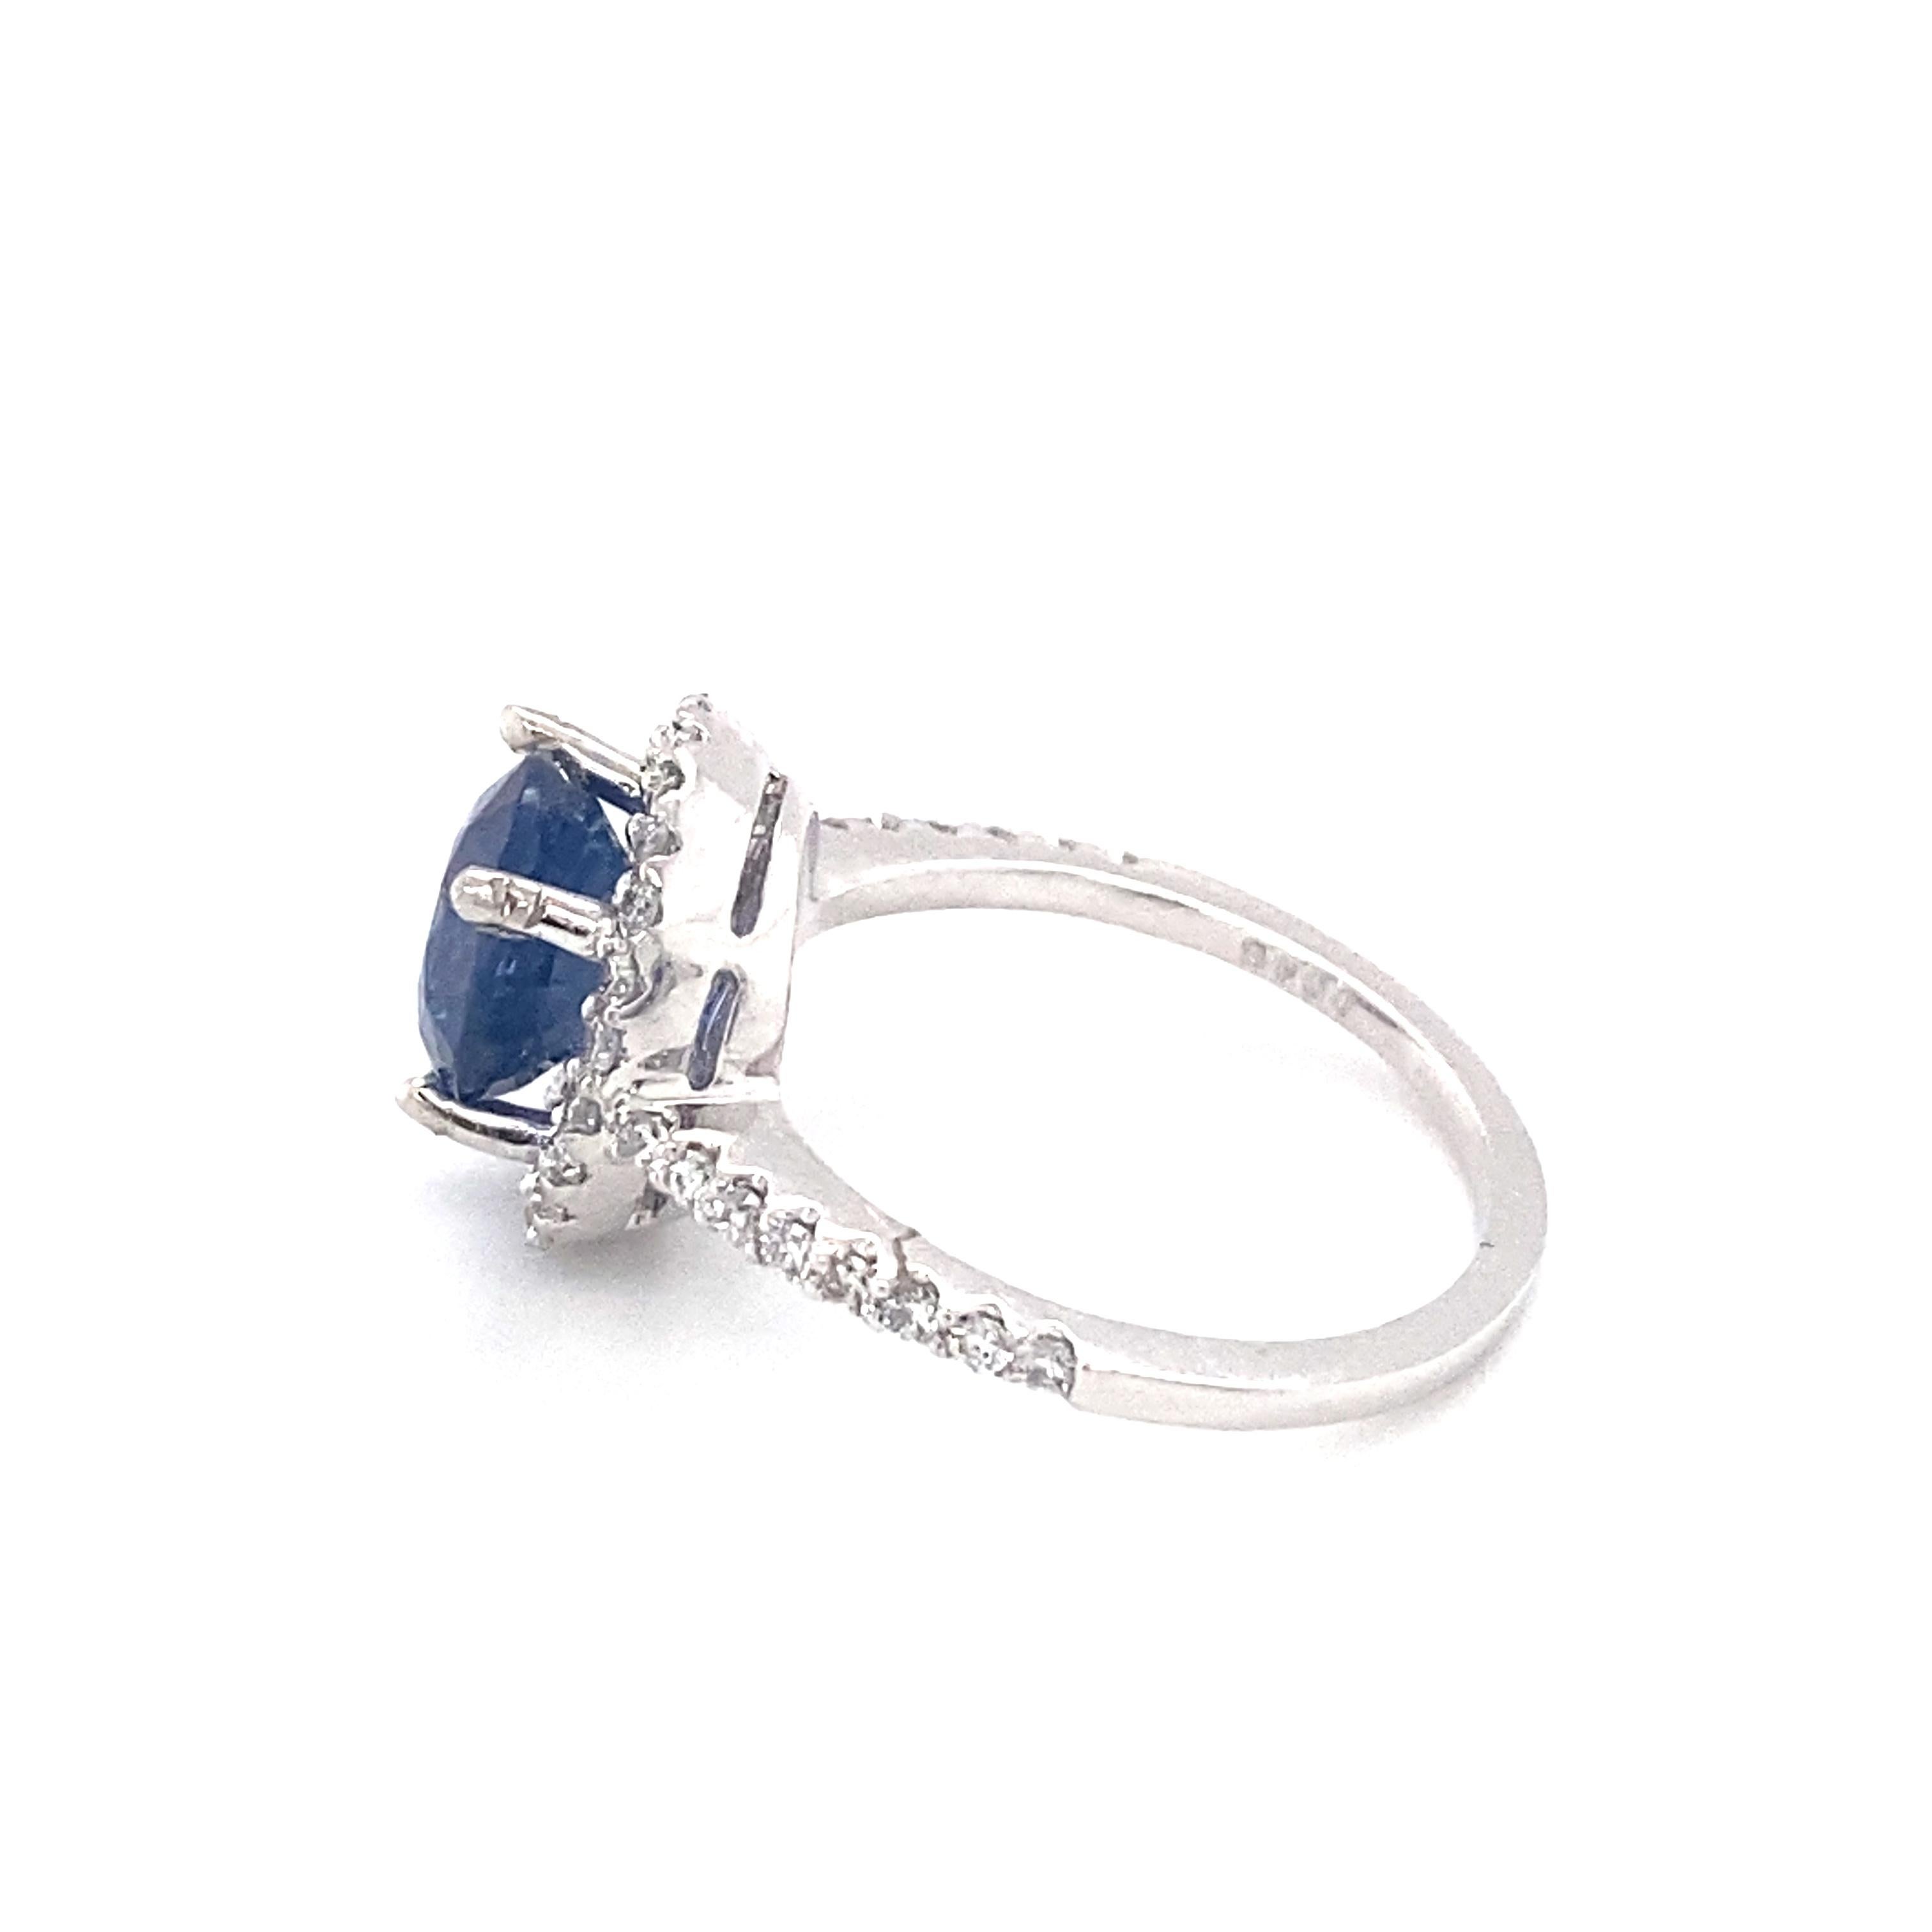 Modern Circa 1990s 2.70 Carat Natural Ceylon Sapphire and Diamond Ring in Platinum For Sale